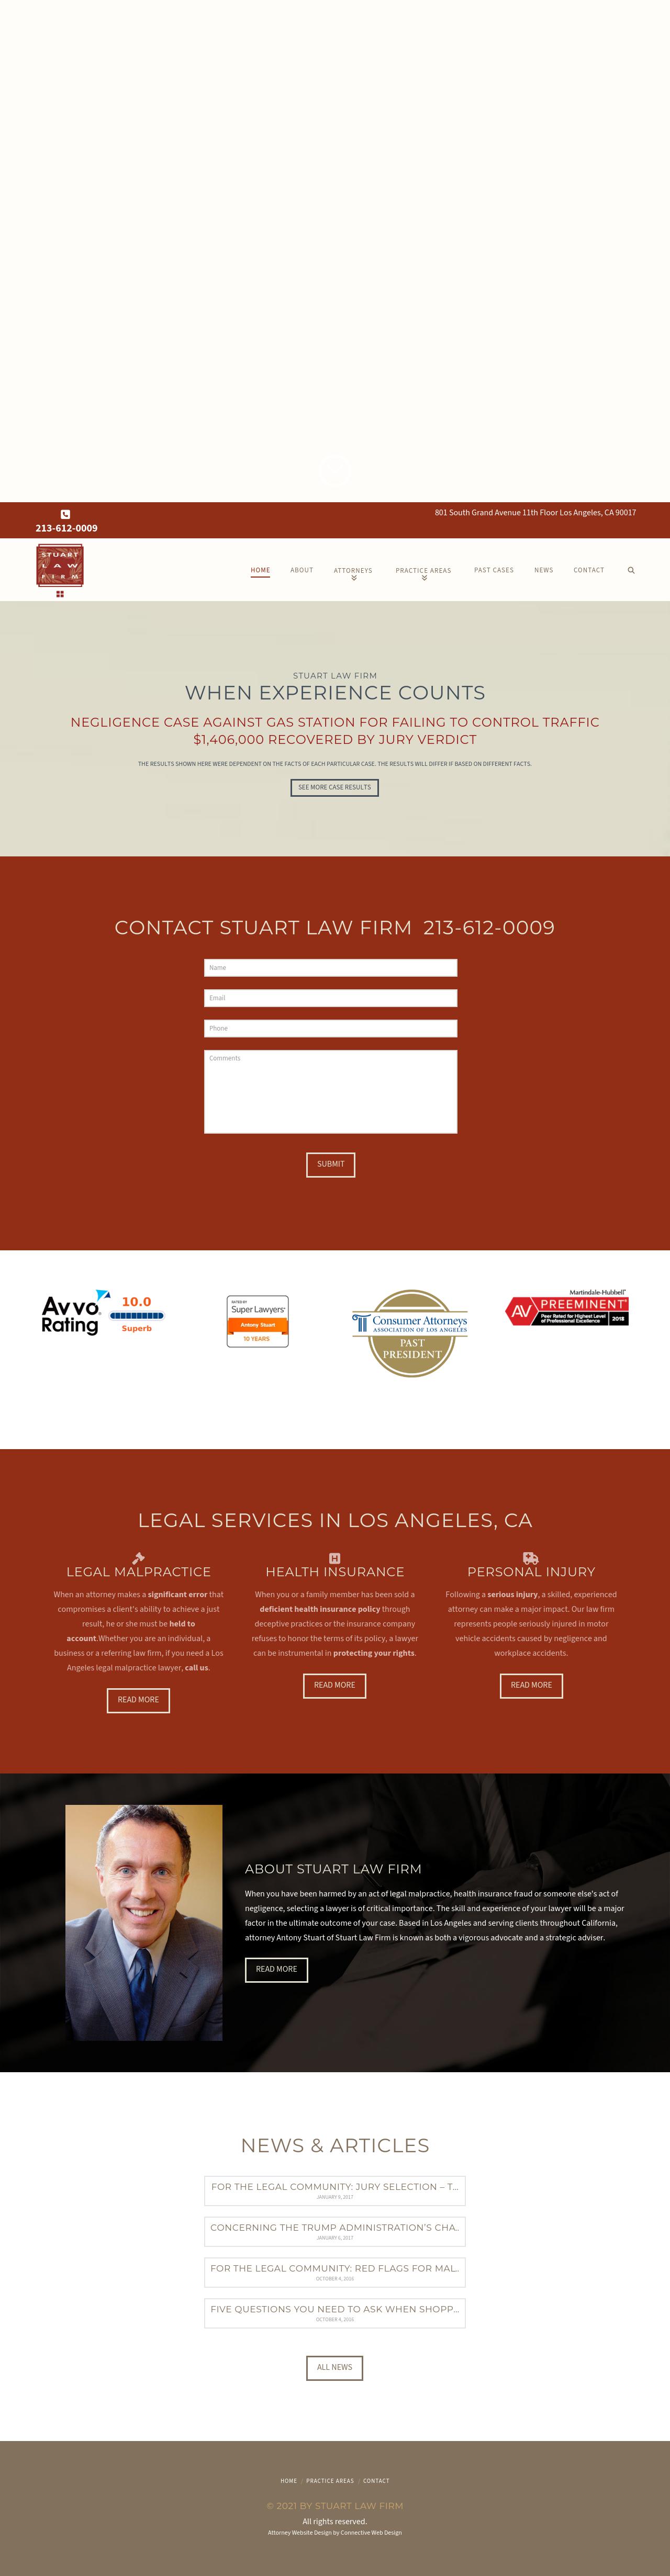 Stuart Law Firm - Los Angeles CA Lawyers